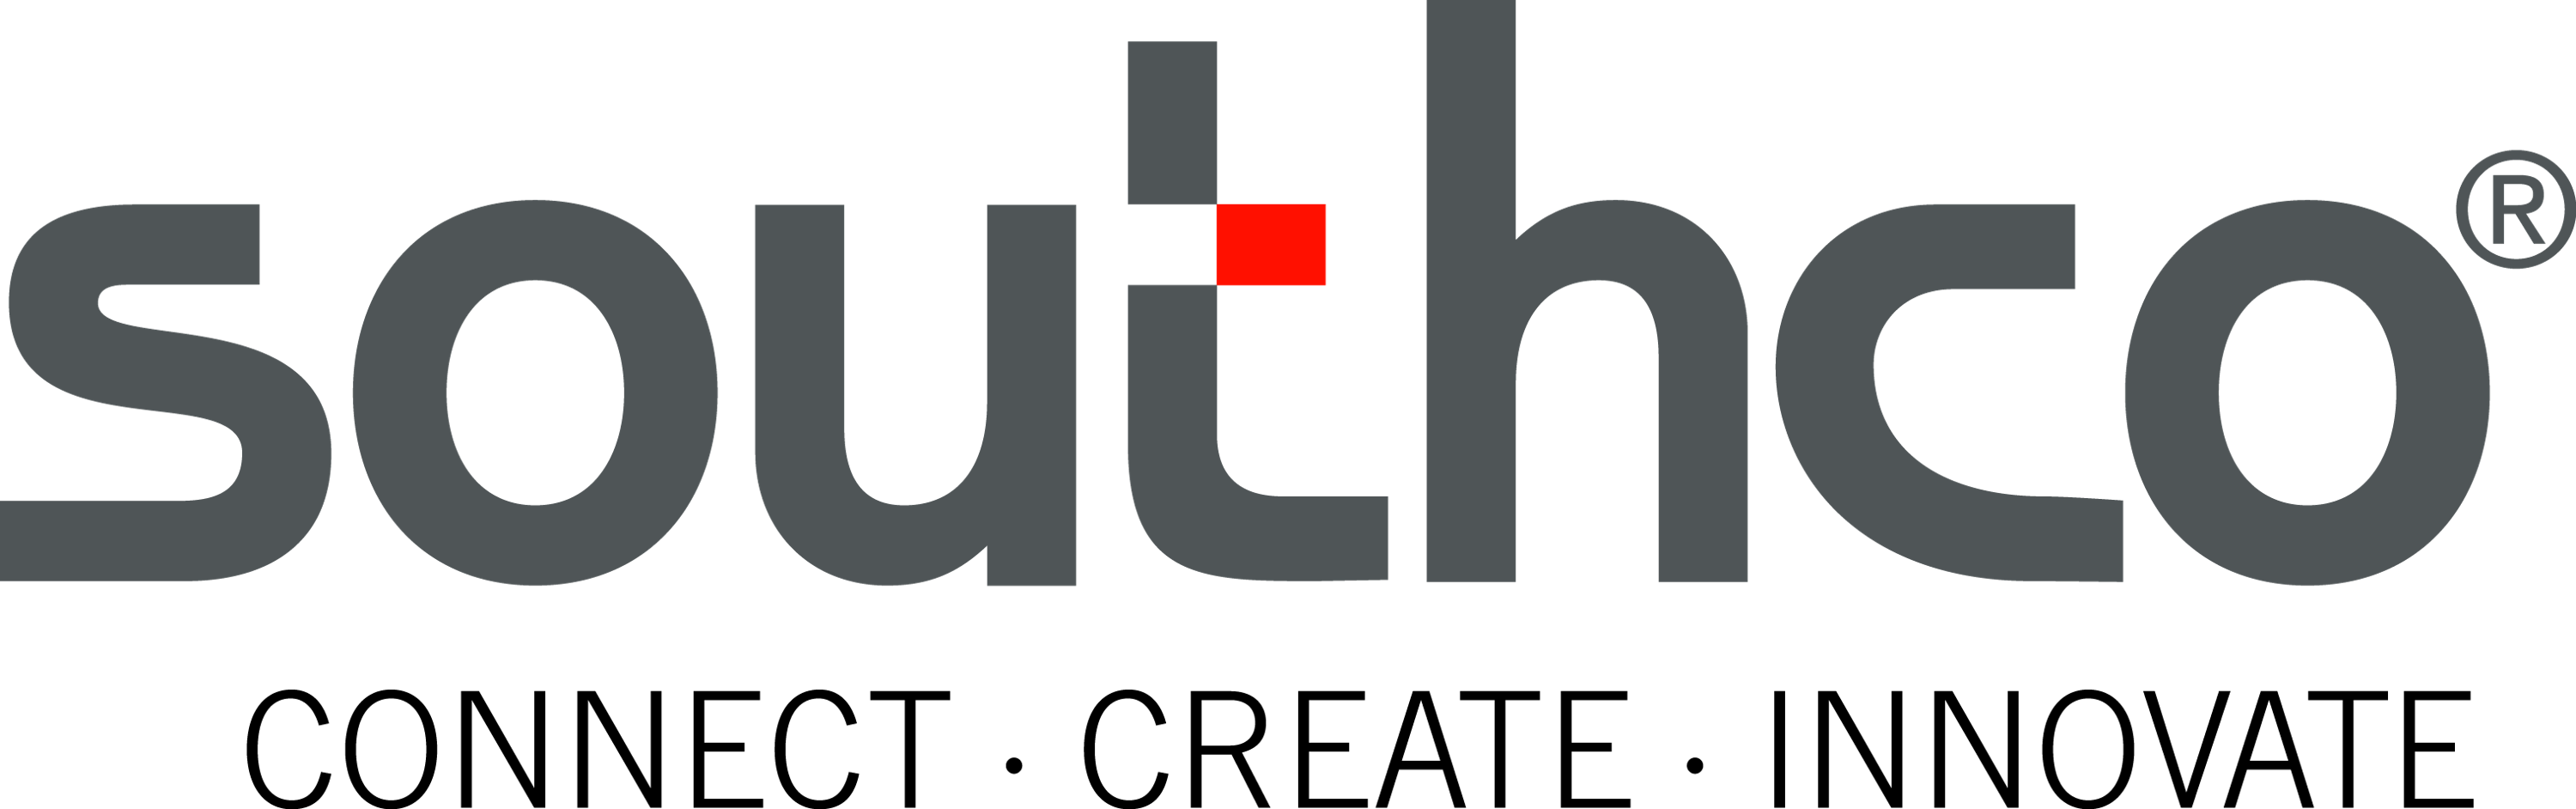 Southco's Logo